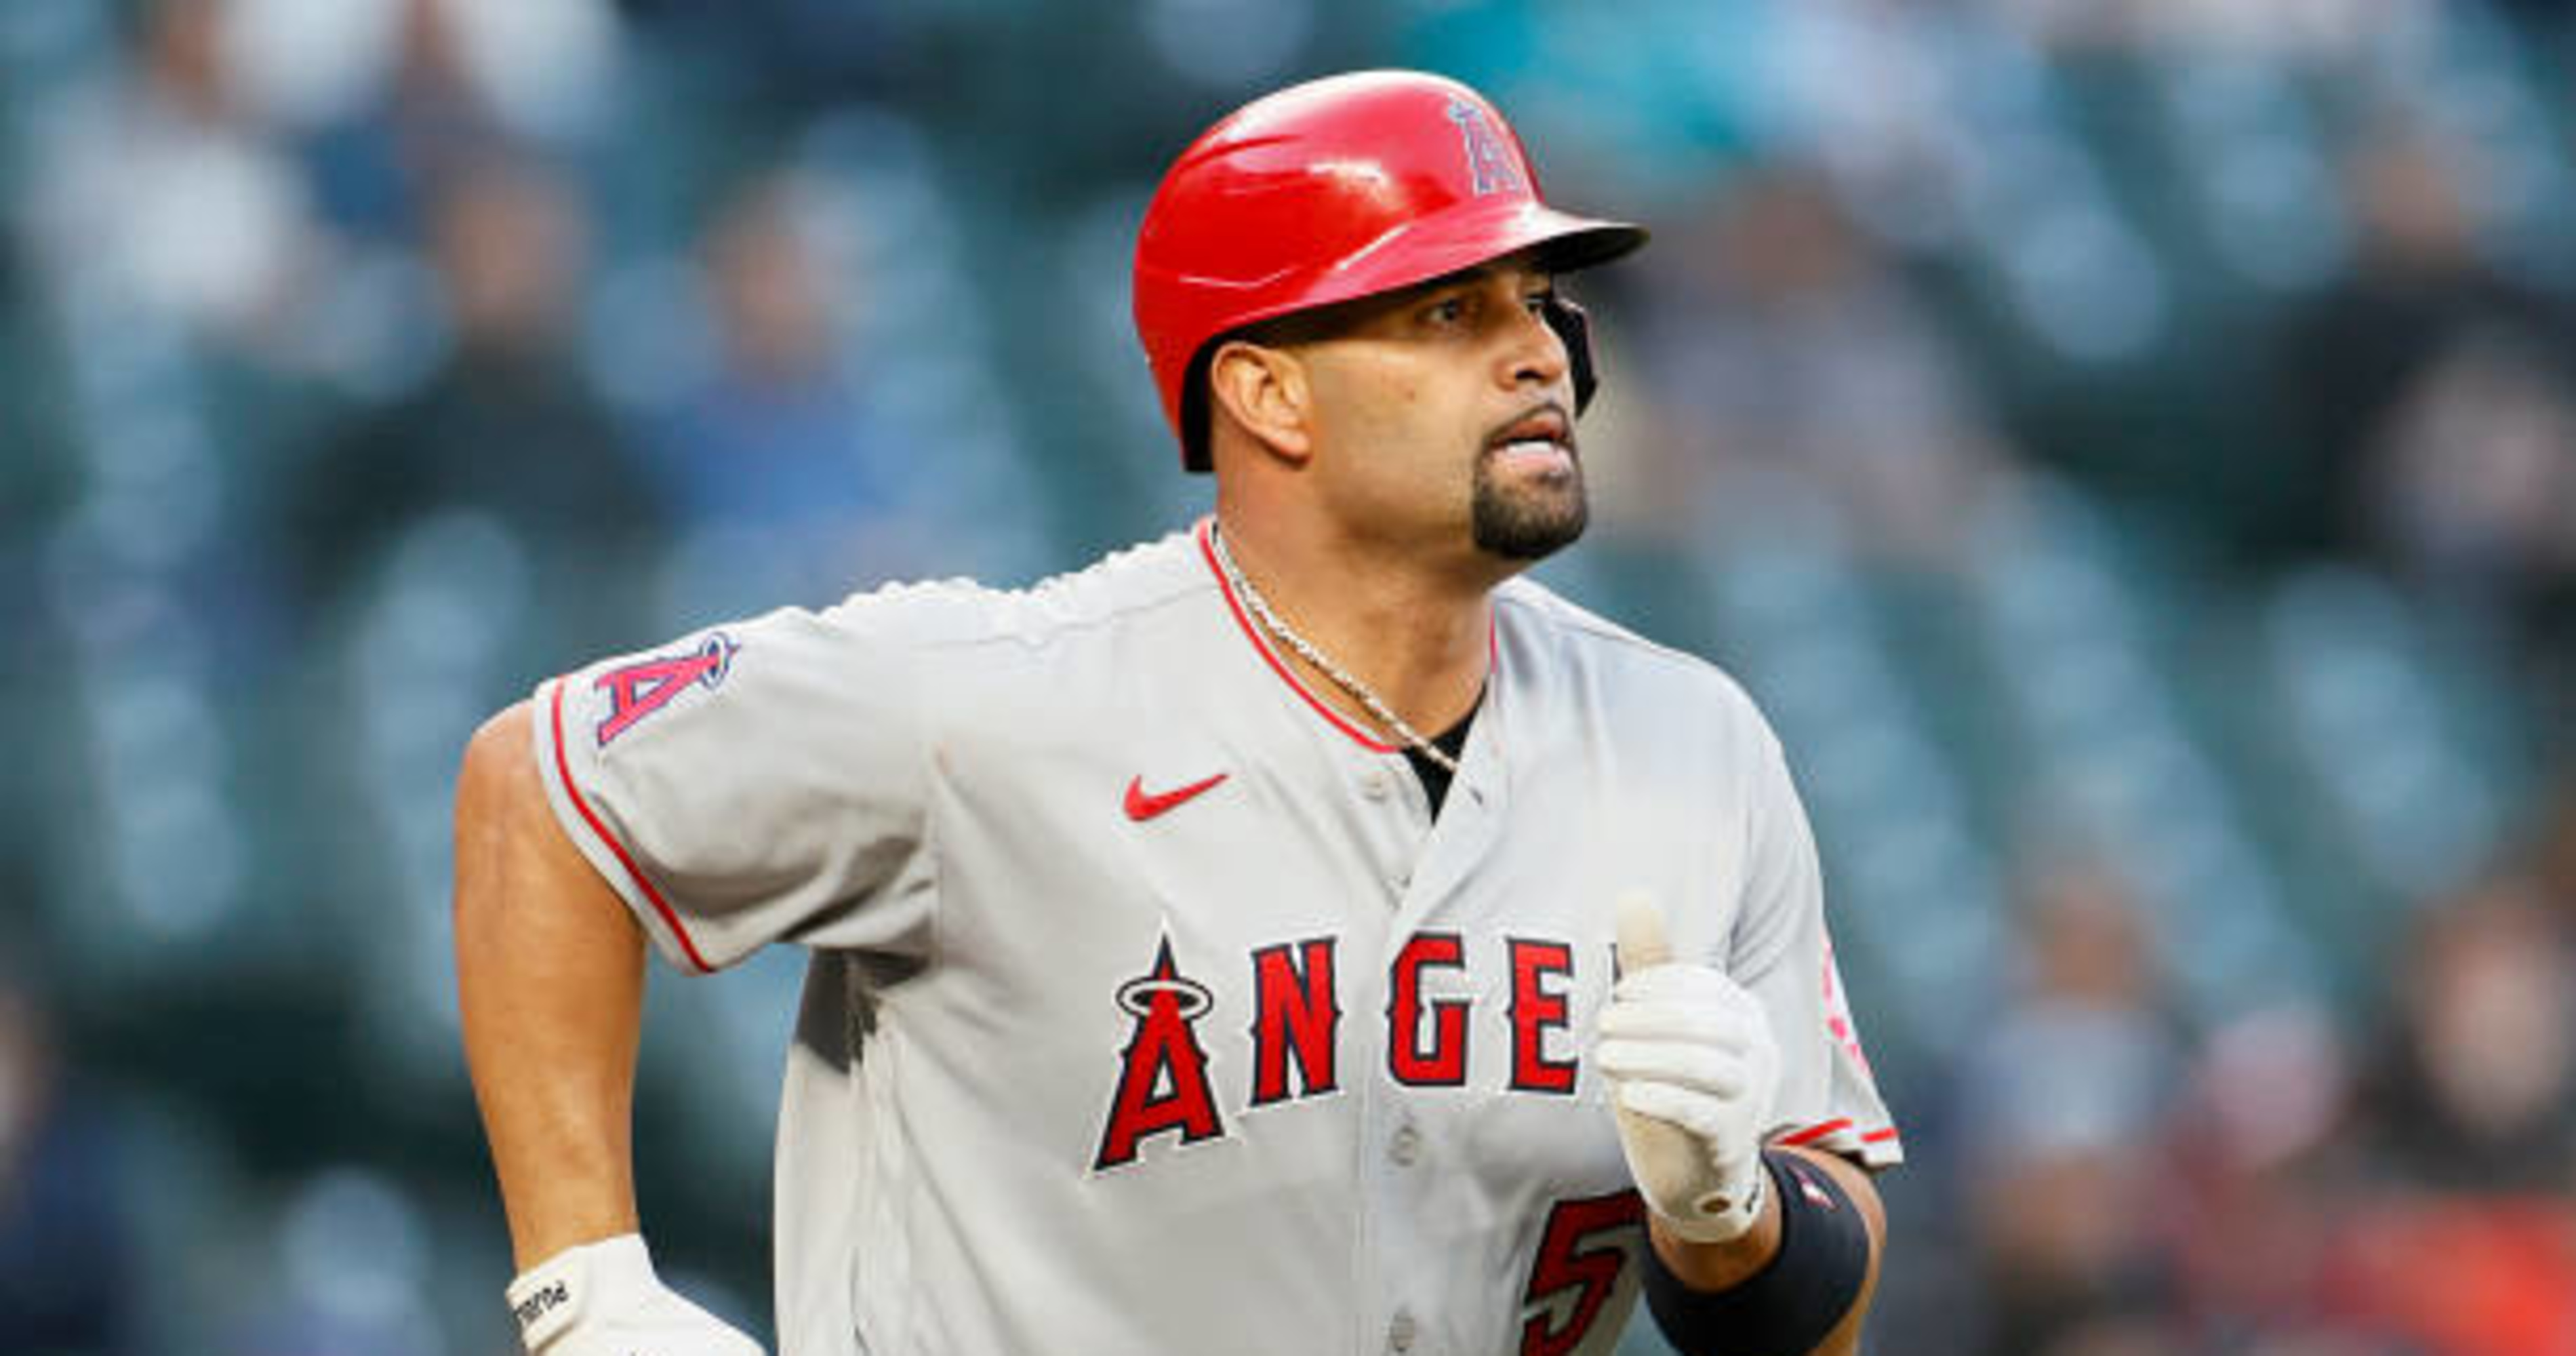 Angels' Albert Pujols may be playing in final MLB season in 2021